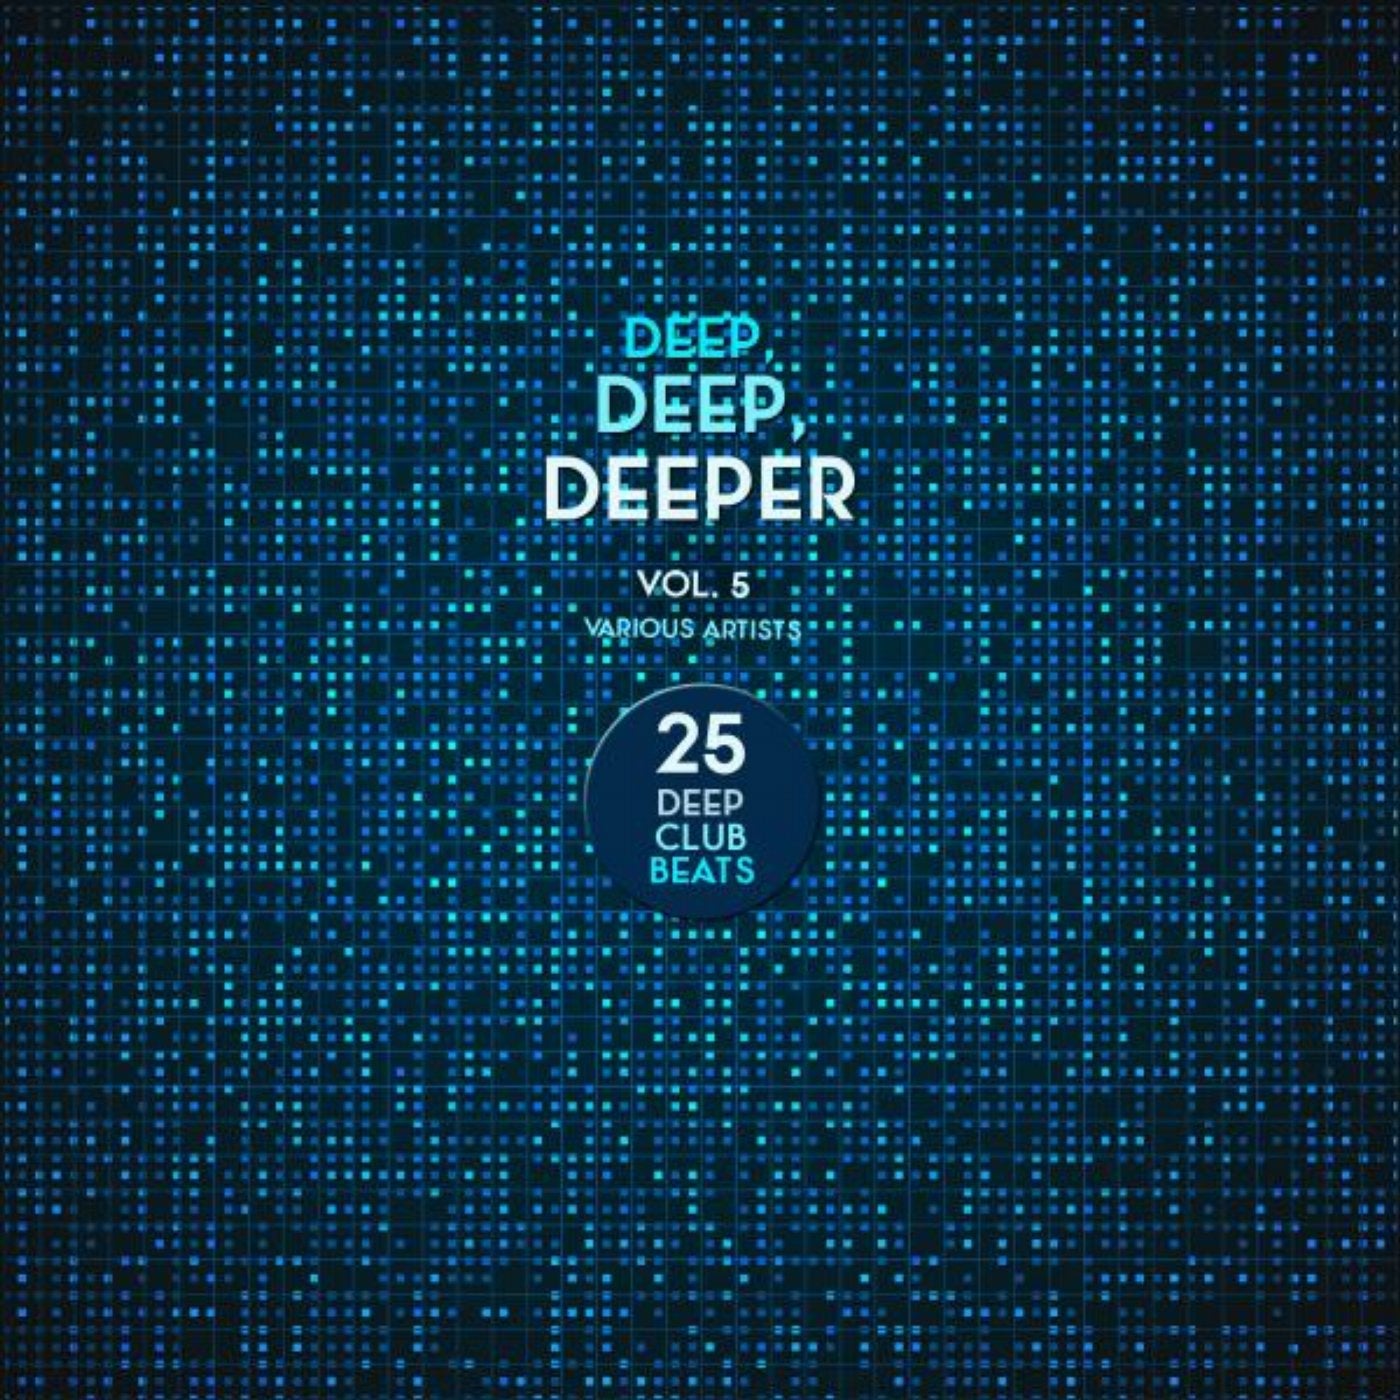 Deep, Deep, Deeper, Vol. 5 (25 Deep Club Beats)